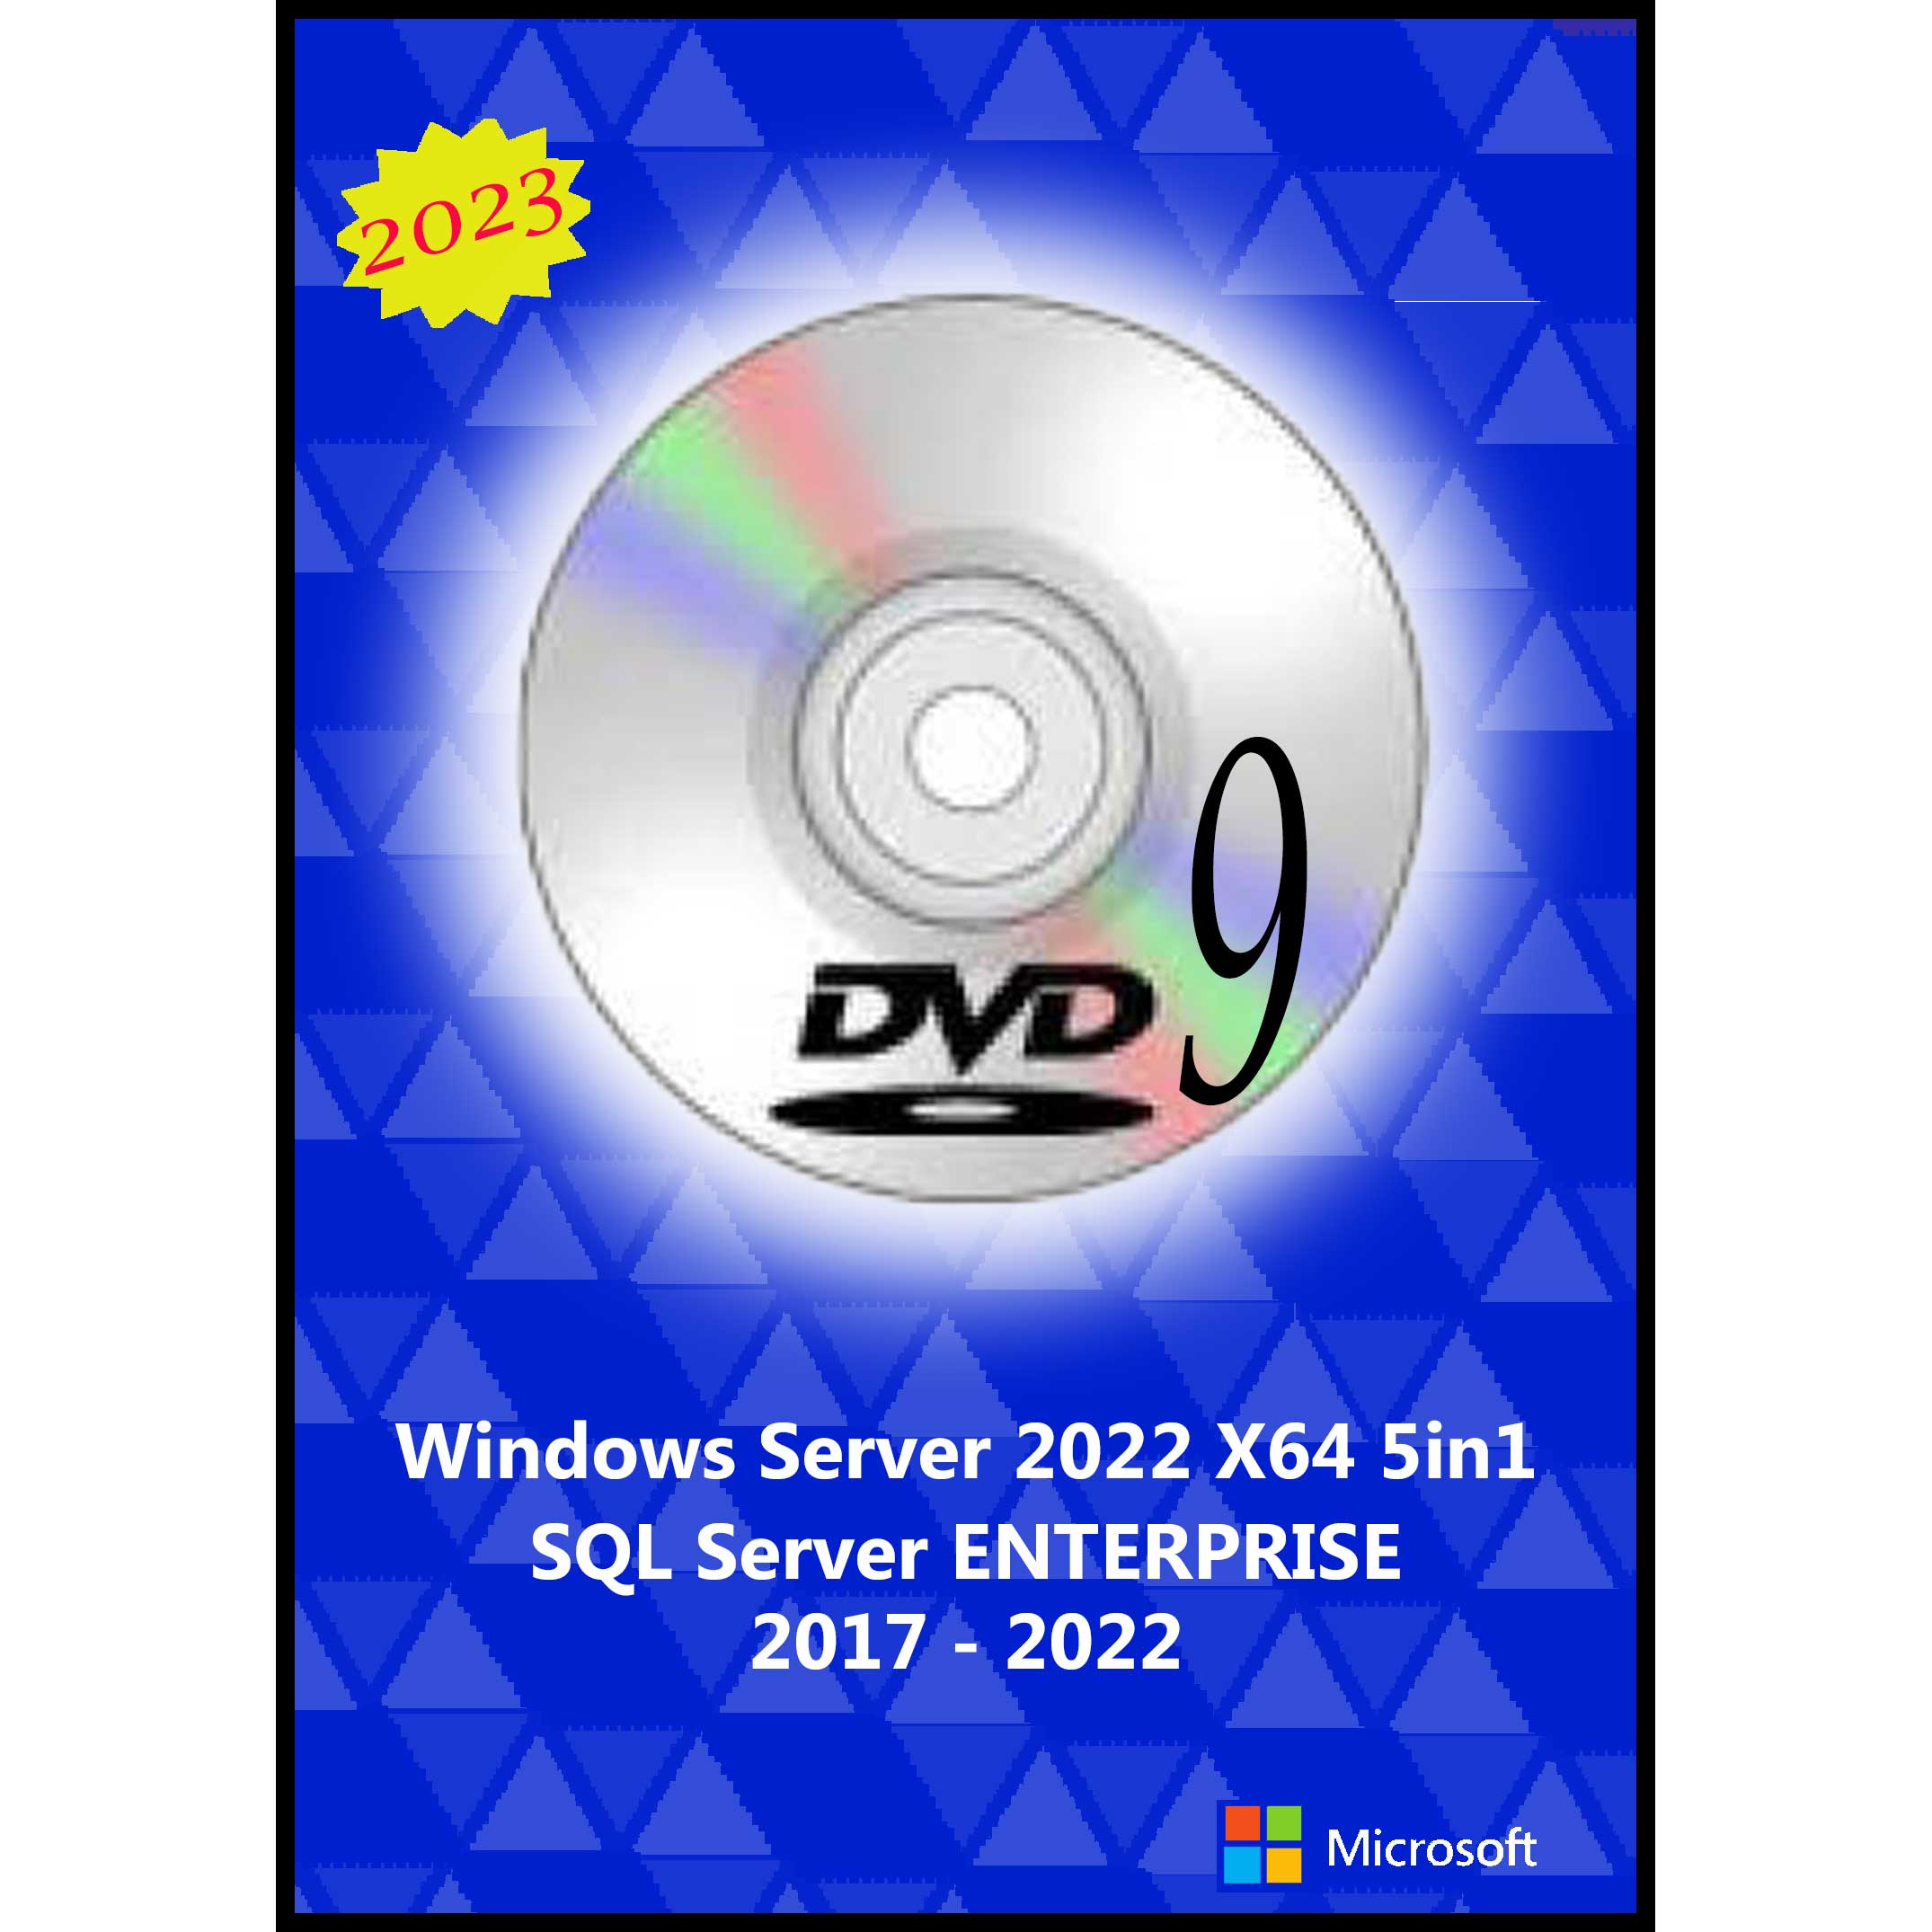 سیستم عامل Windows Server 2022 5in1 - SQL SERVER Ent. 2017-2022 - 2023 DVD9 نشر مایکروسافت 